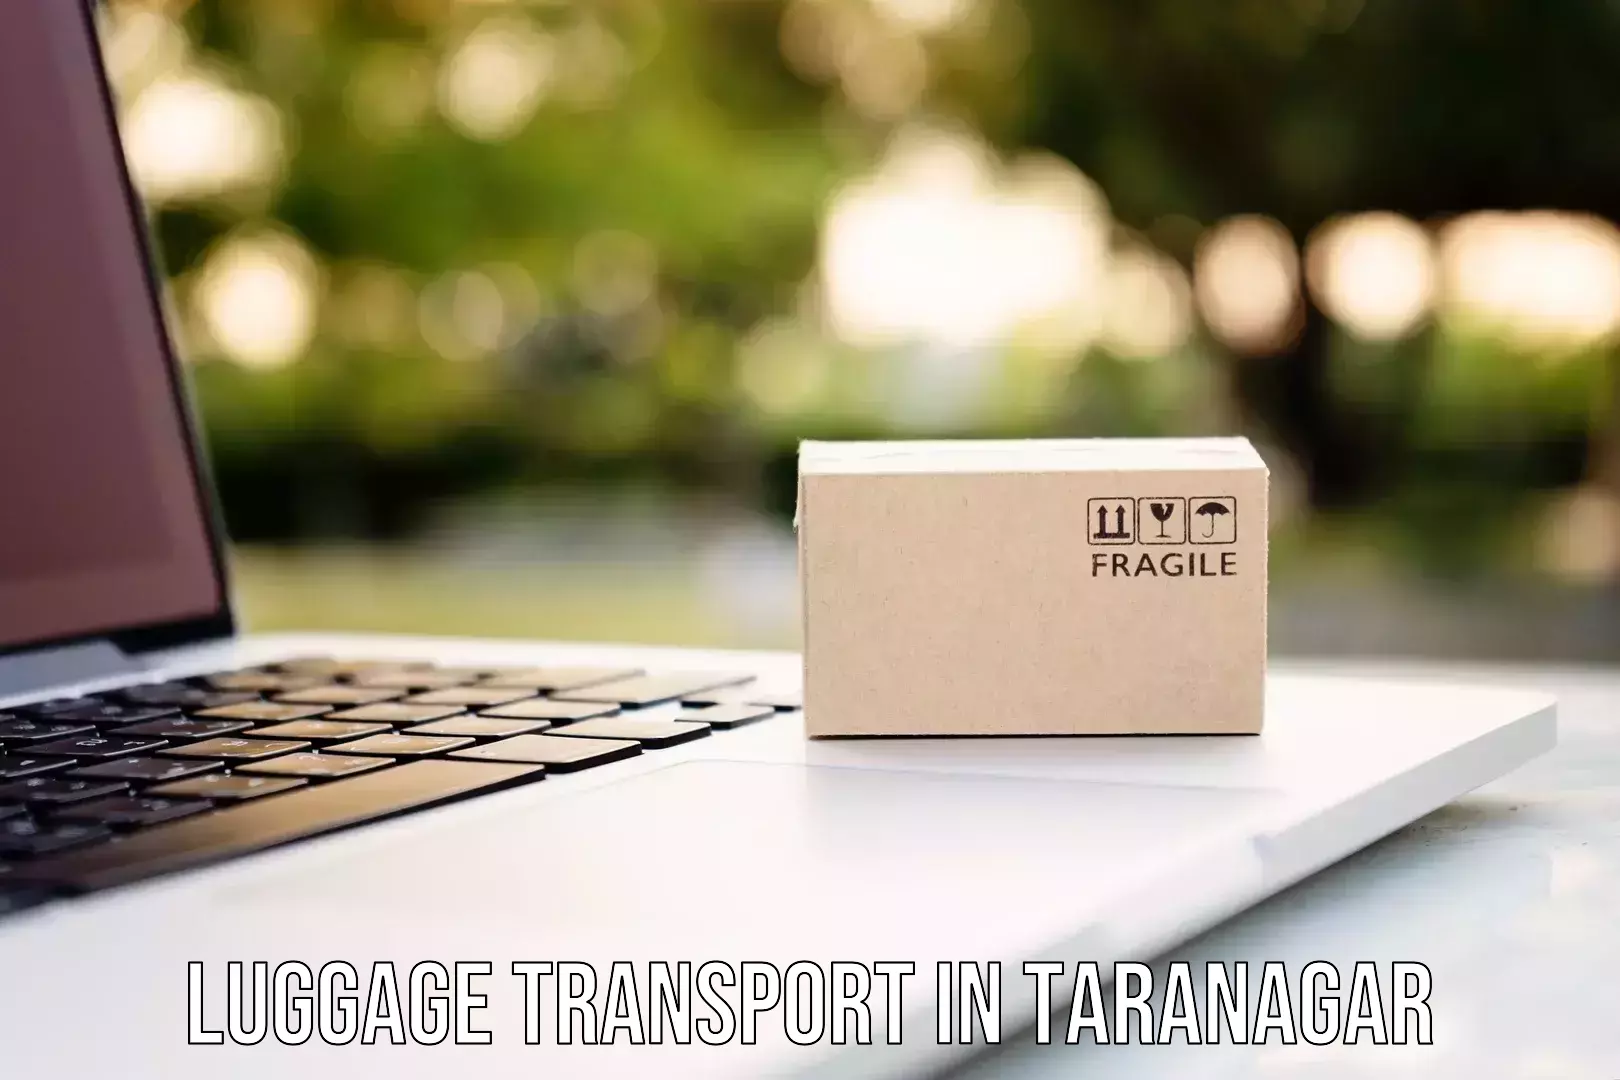 Luggage transport guidelines in Taranagar